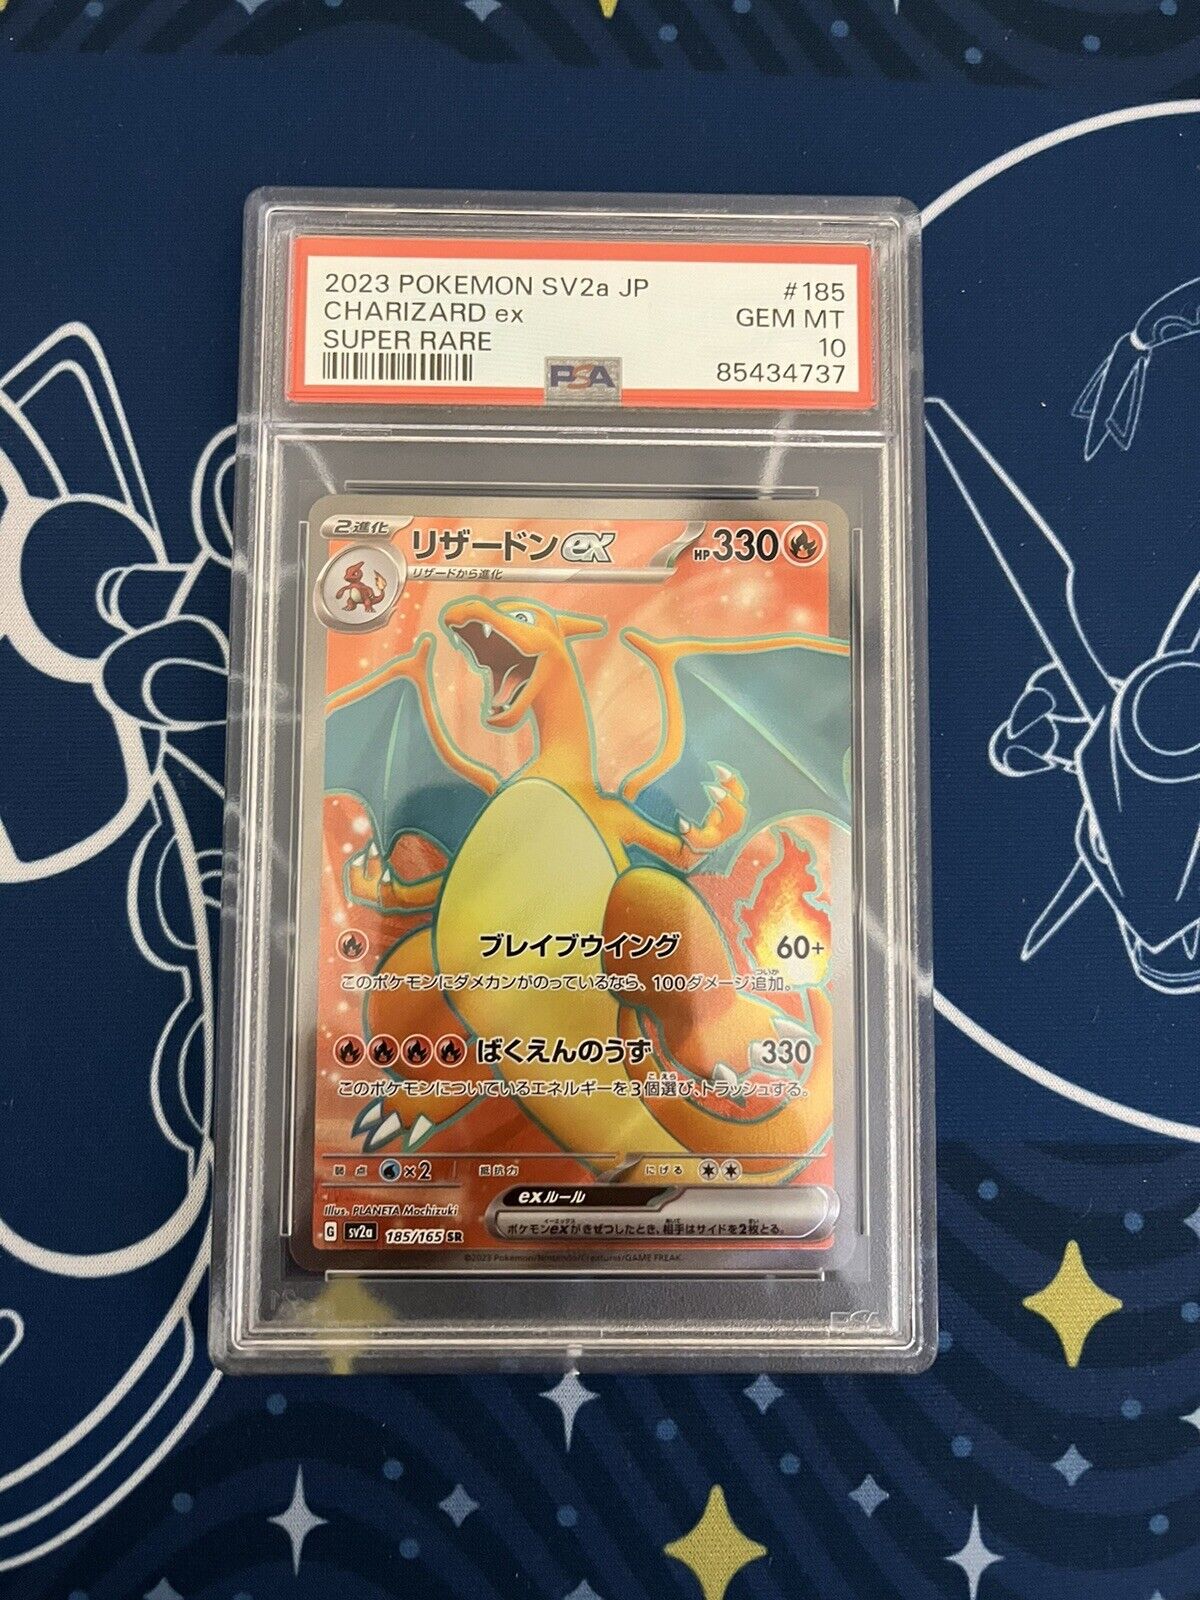 PSA 10 Charizard EX 185/165 SV2a 151 Super Rare Japanese Pokemon Card GEM MINT